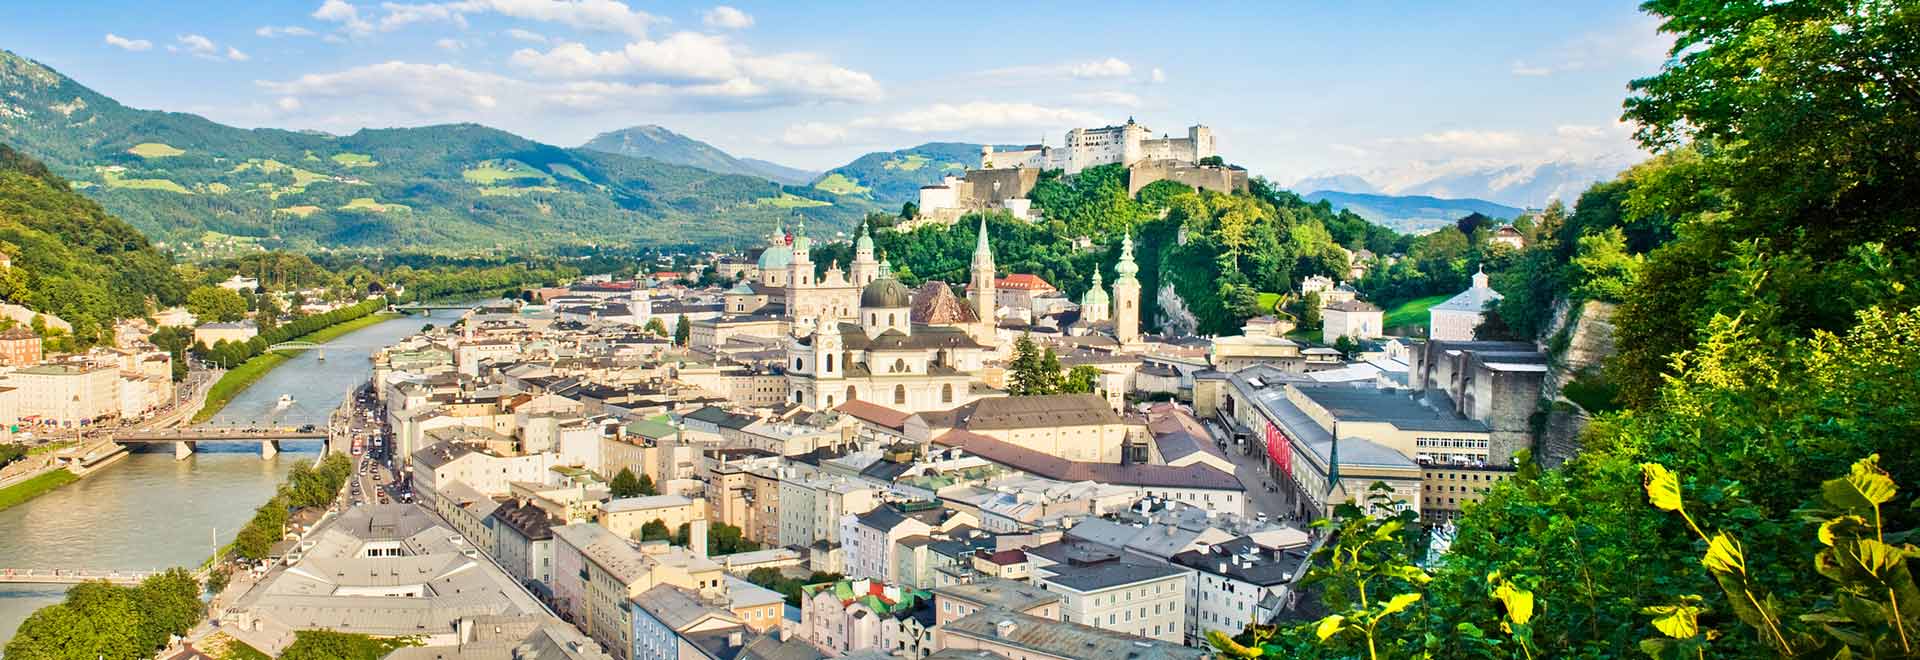 Europe Austria Salzburg